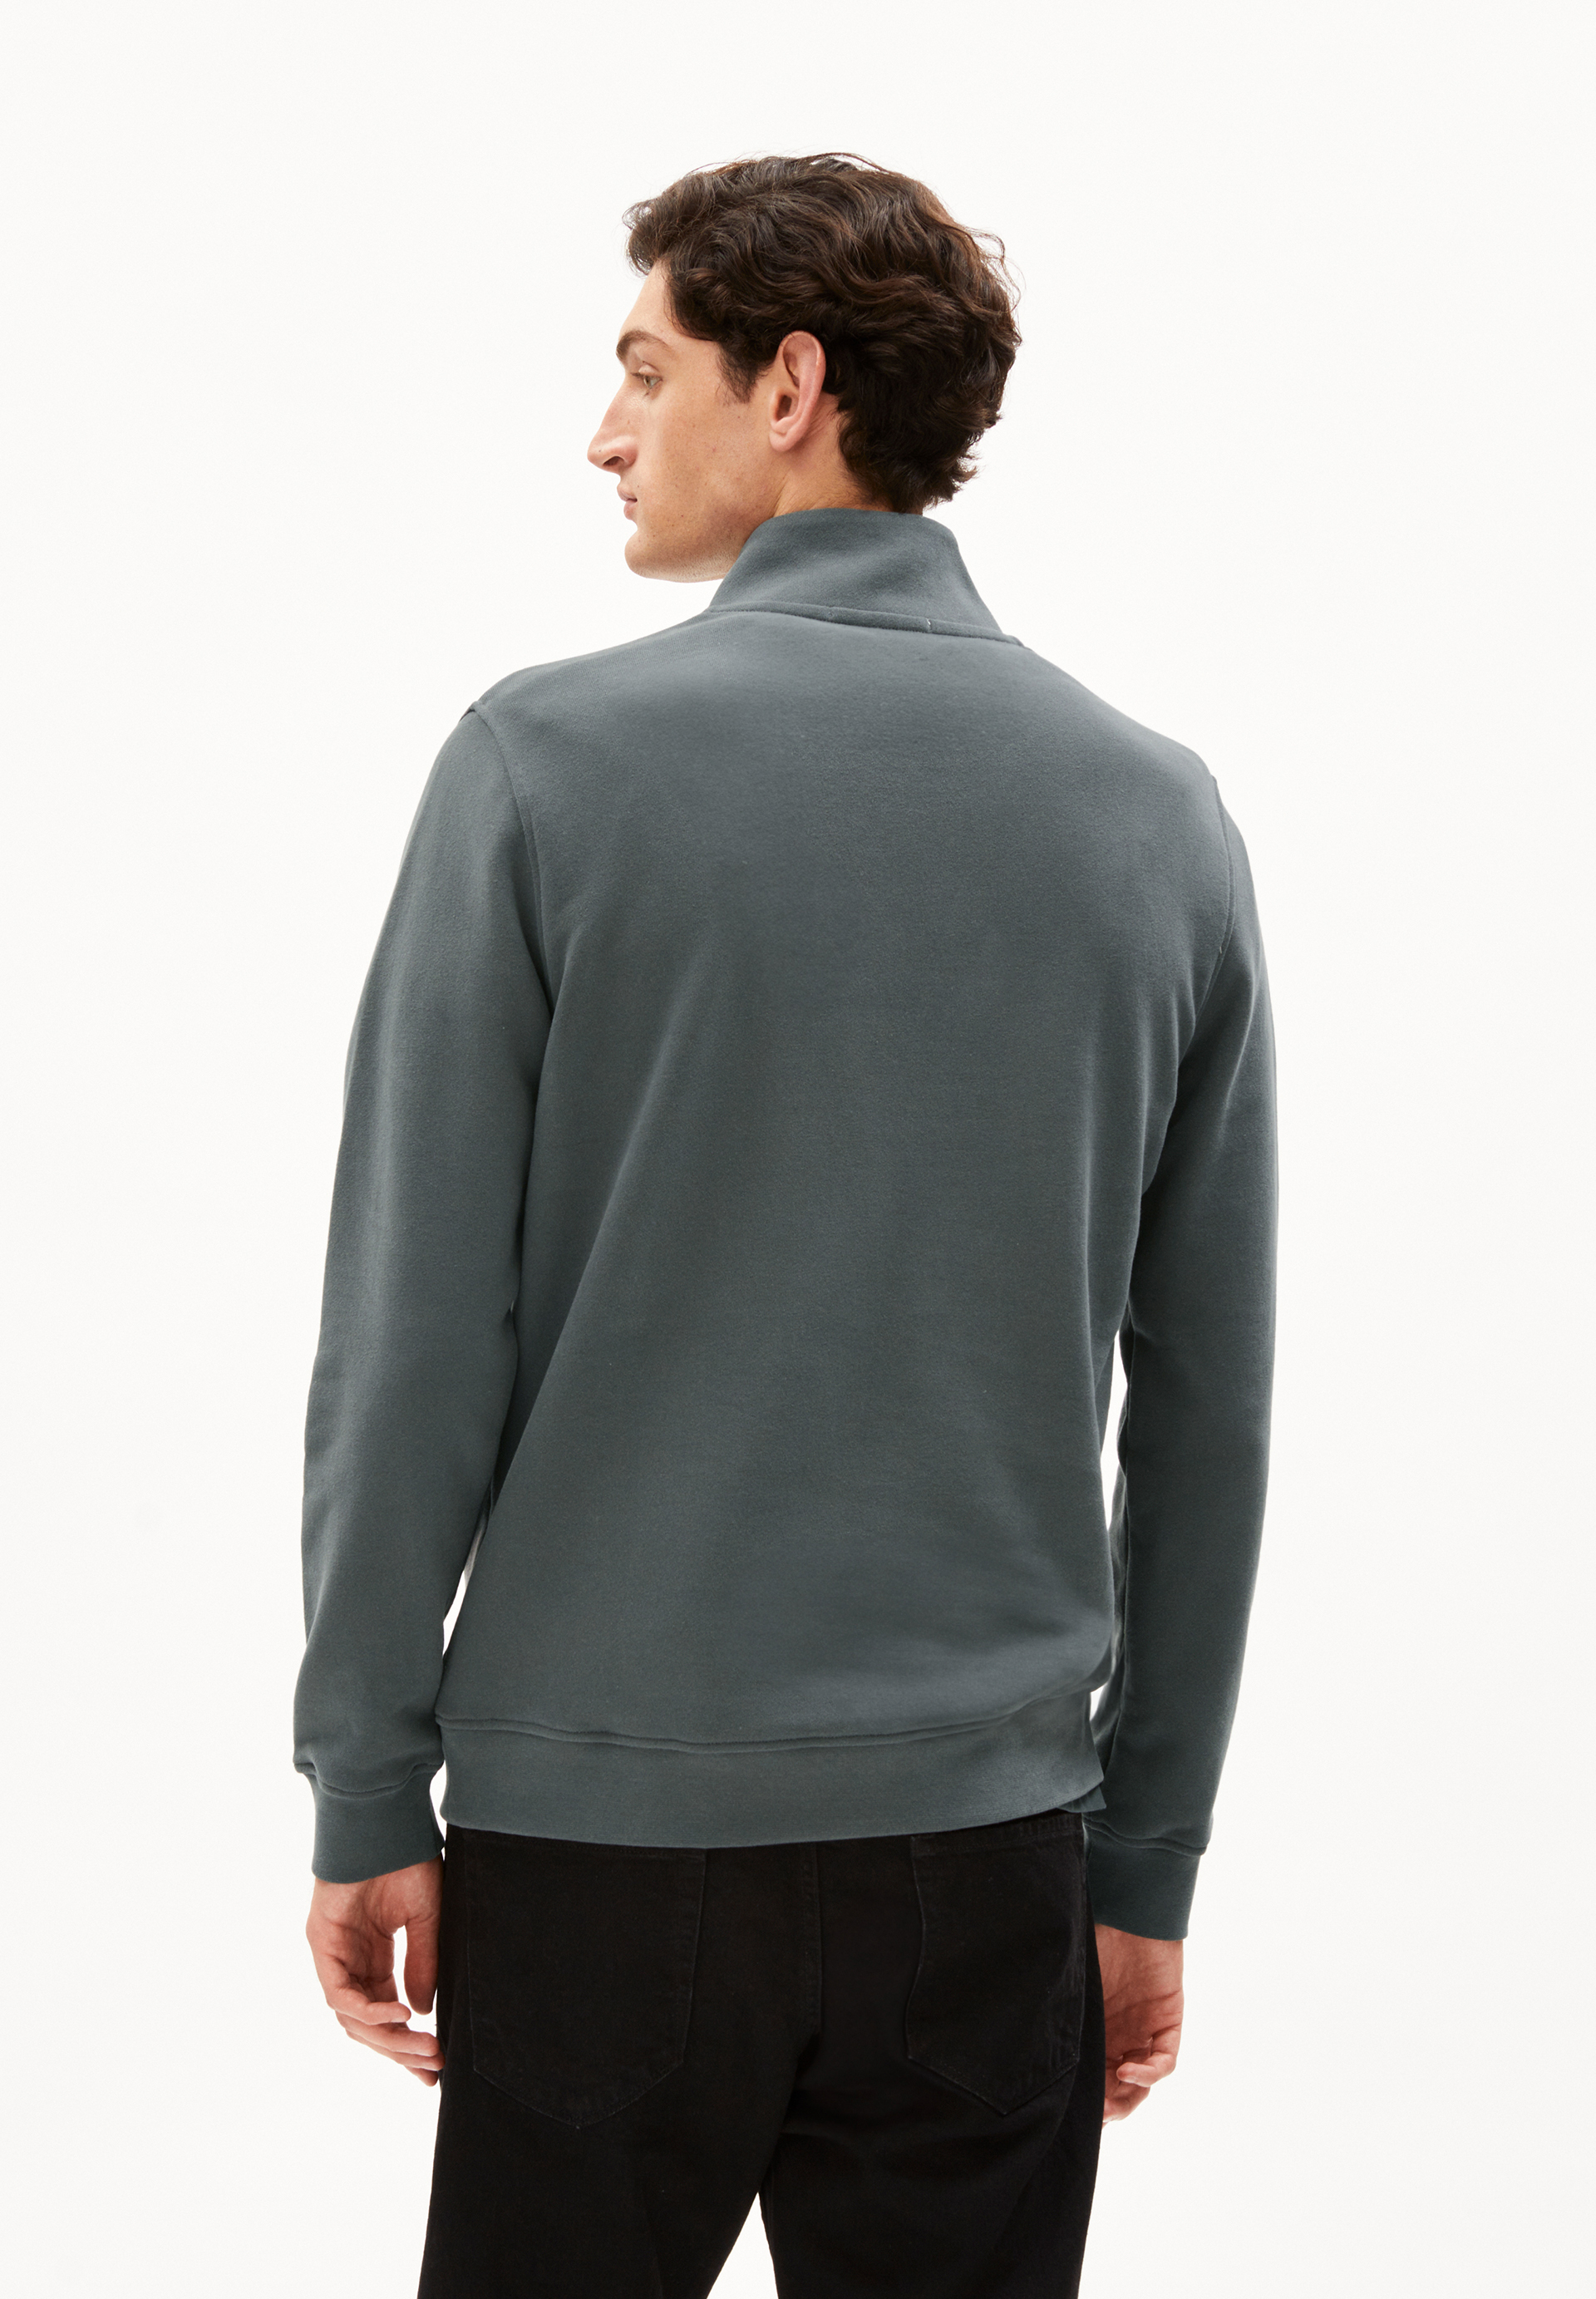 WAARLO COMFORT Sweat-shirt coupe standard en coton bio mélangé